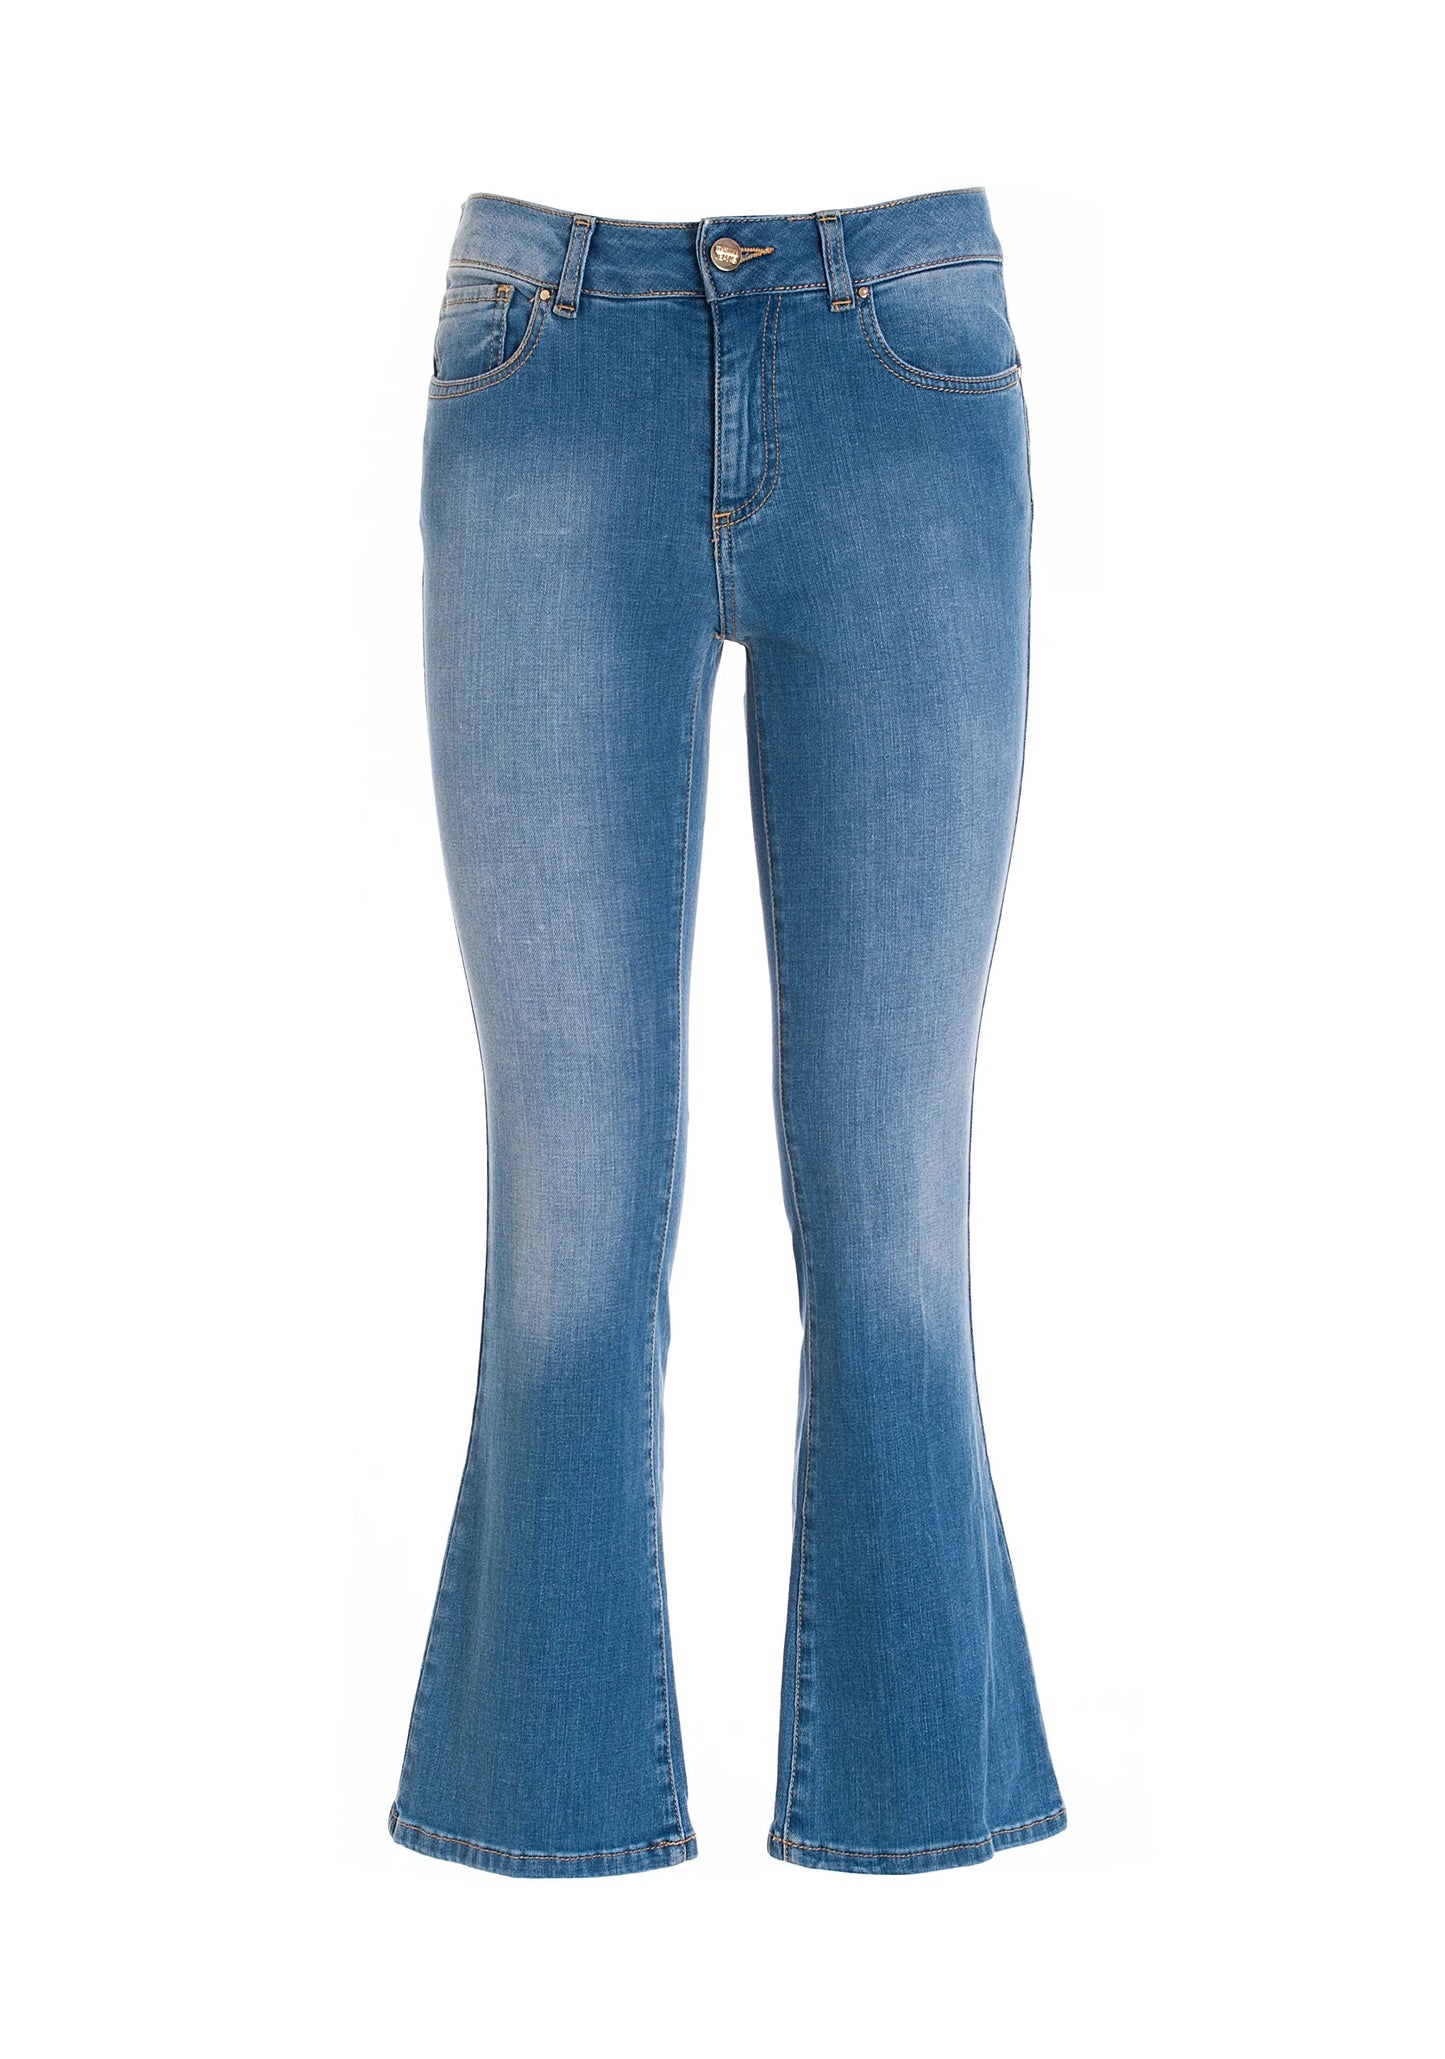 Fracomina jeans donna bella F cropped flare stonewash